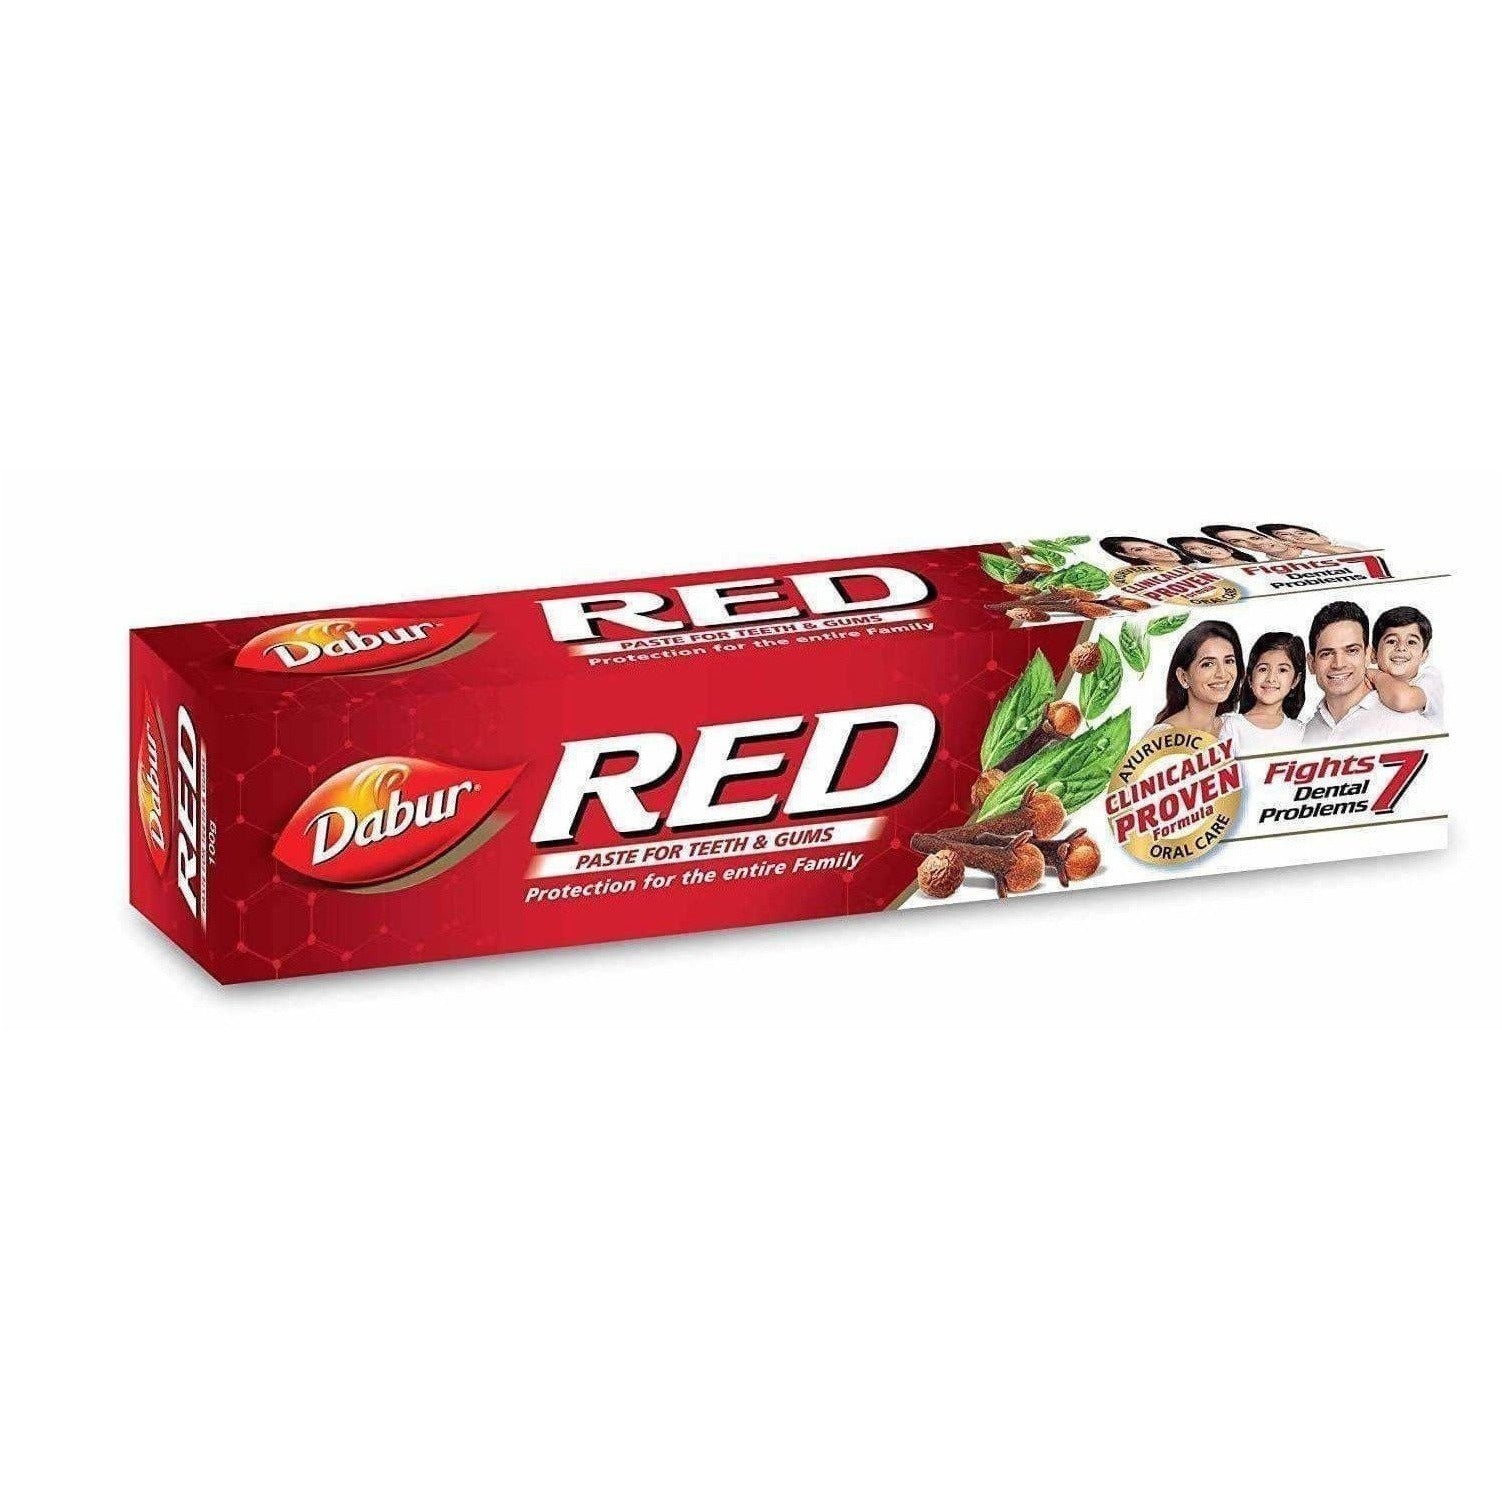 Dabur Red Toothpaste - BUDNE